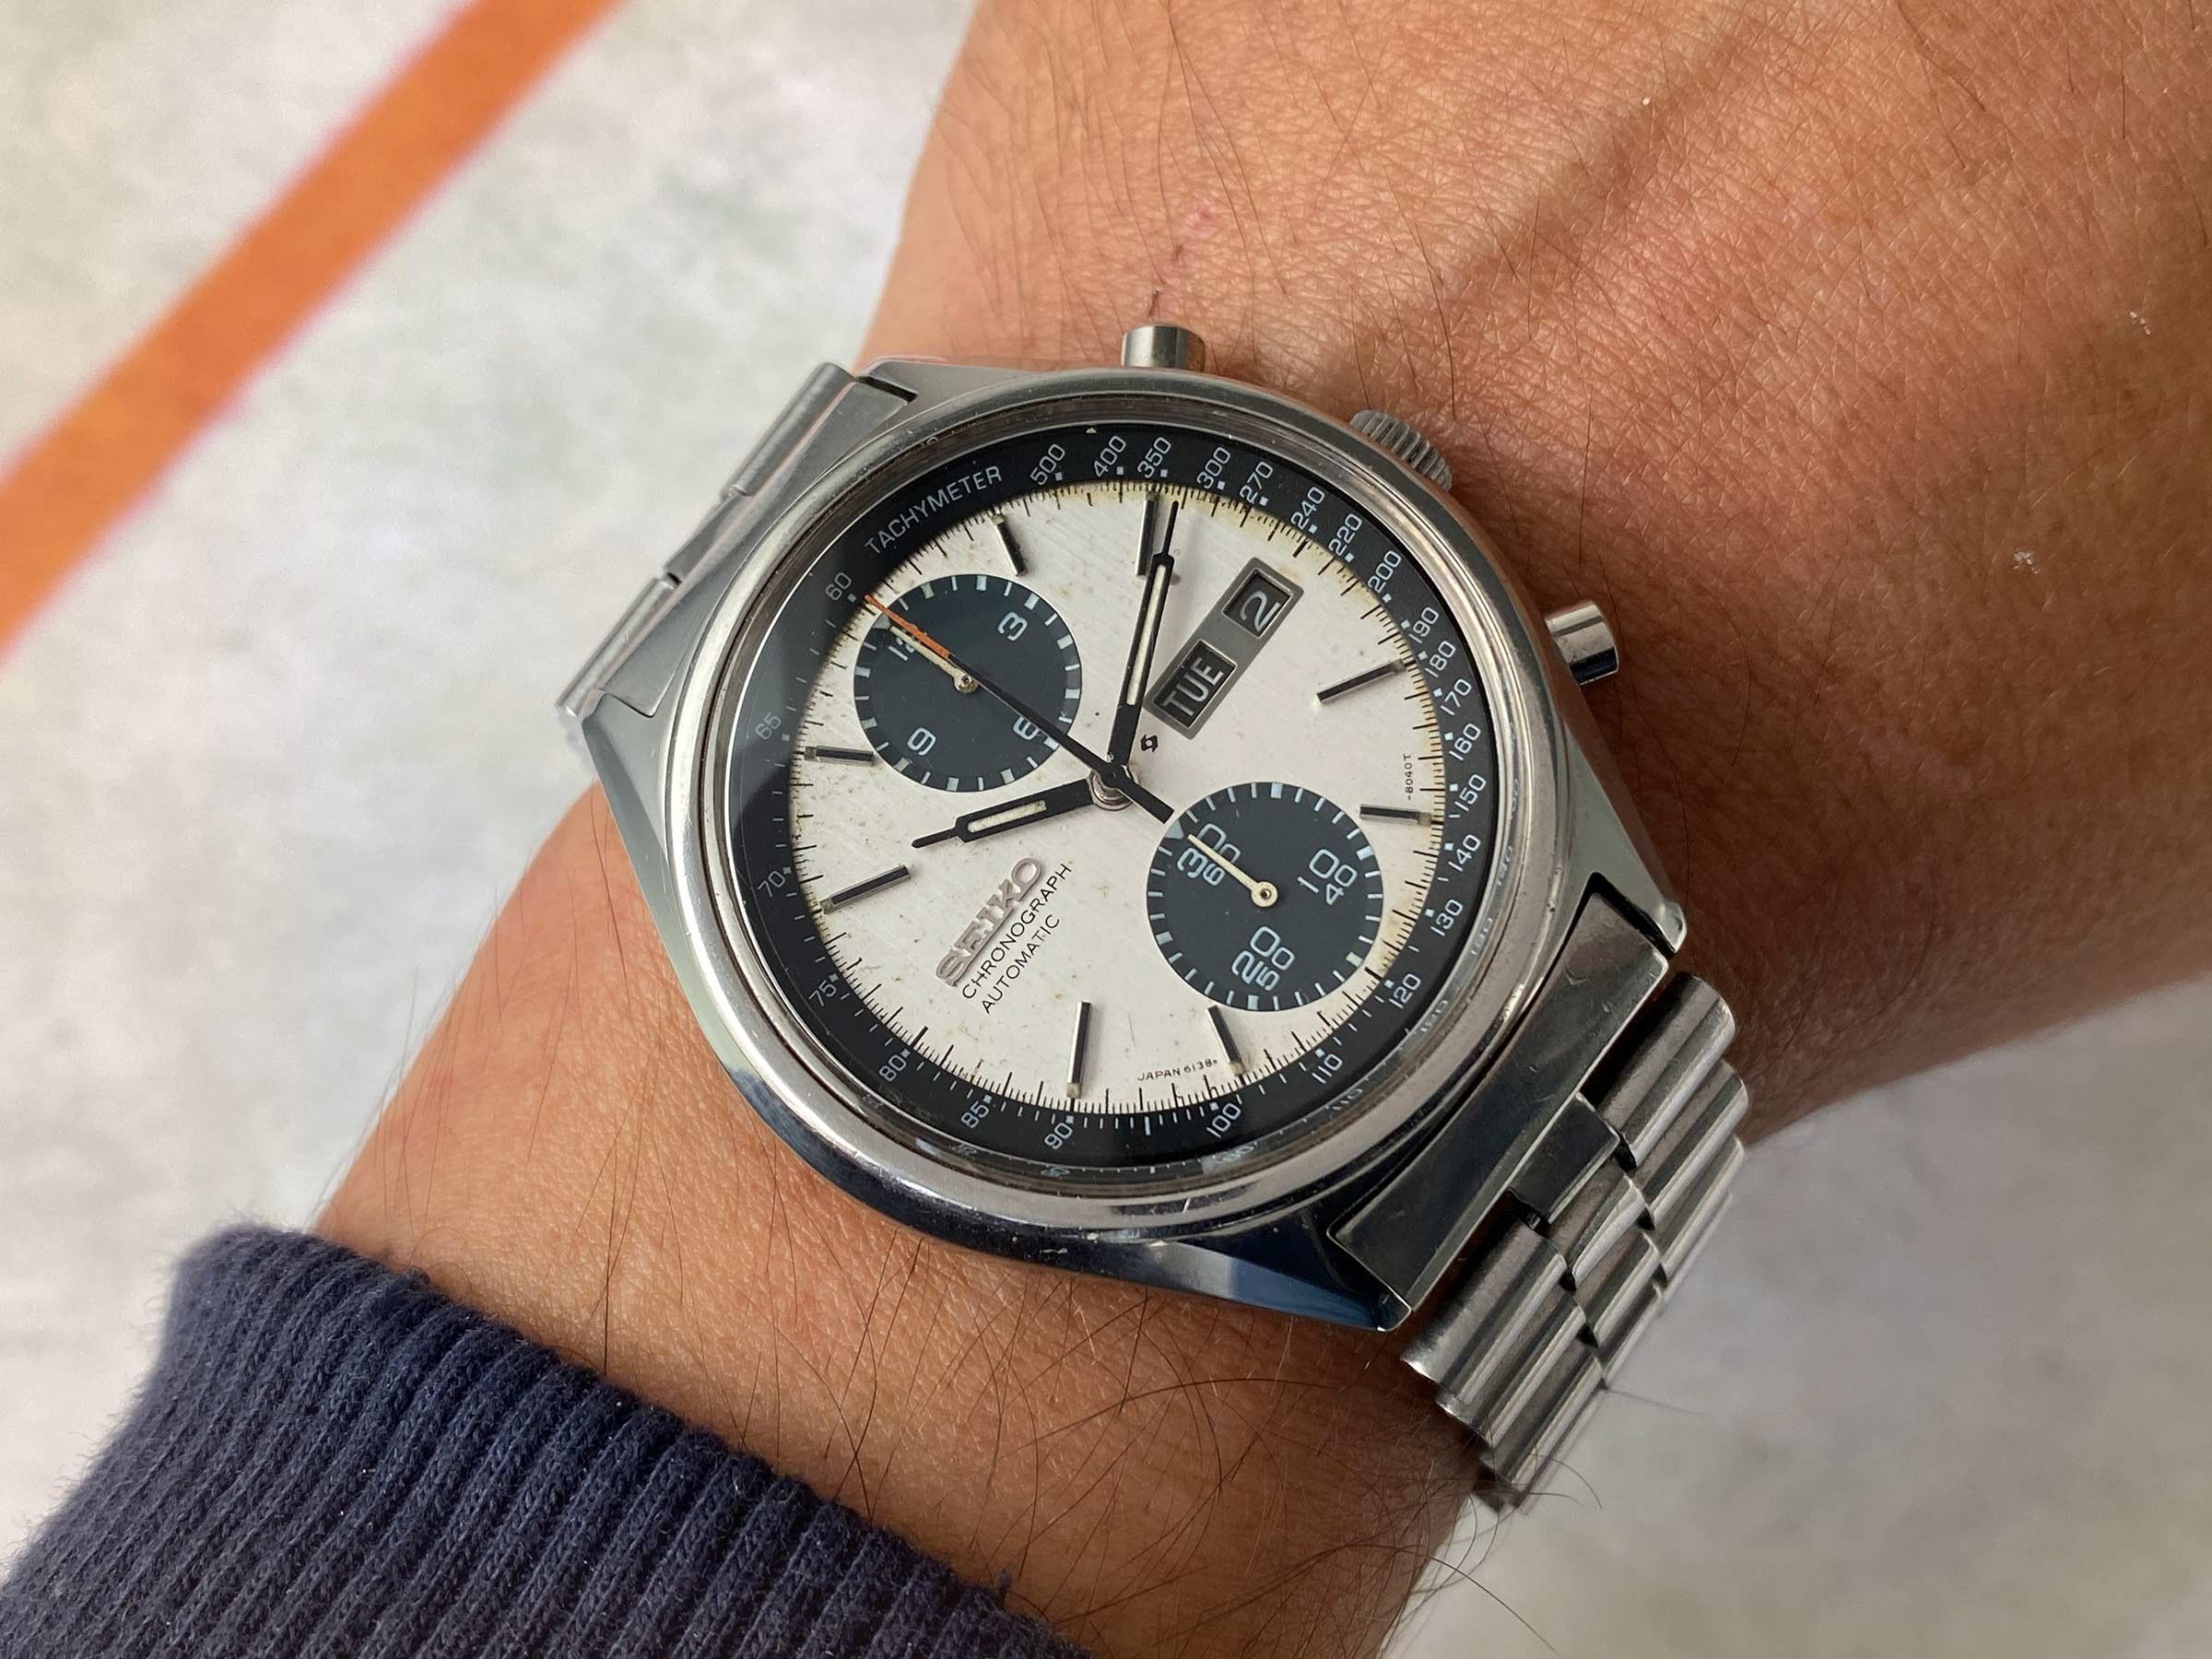 SEIKO PANDA Vintage automatic chronograph watch 1975 Cal. 6138 Ref. 6138- 8020 JAPAN A *** ALL ORIGINAL *** Seiko Vintage watches - Watches83